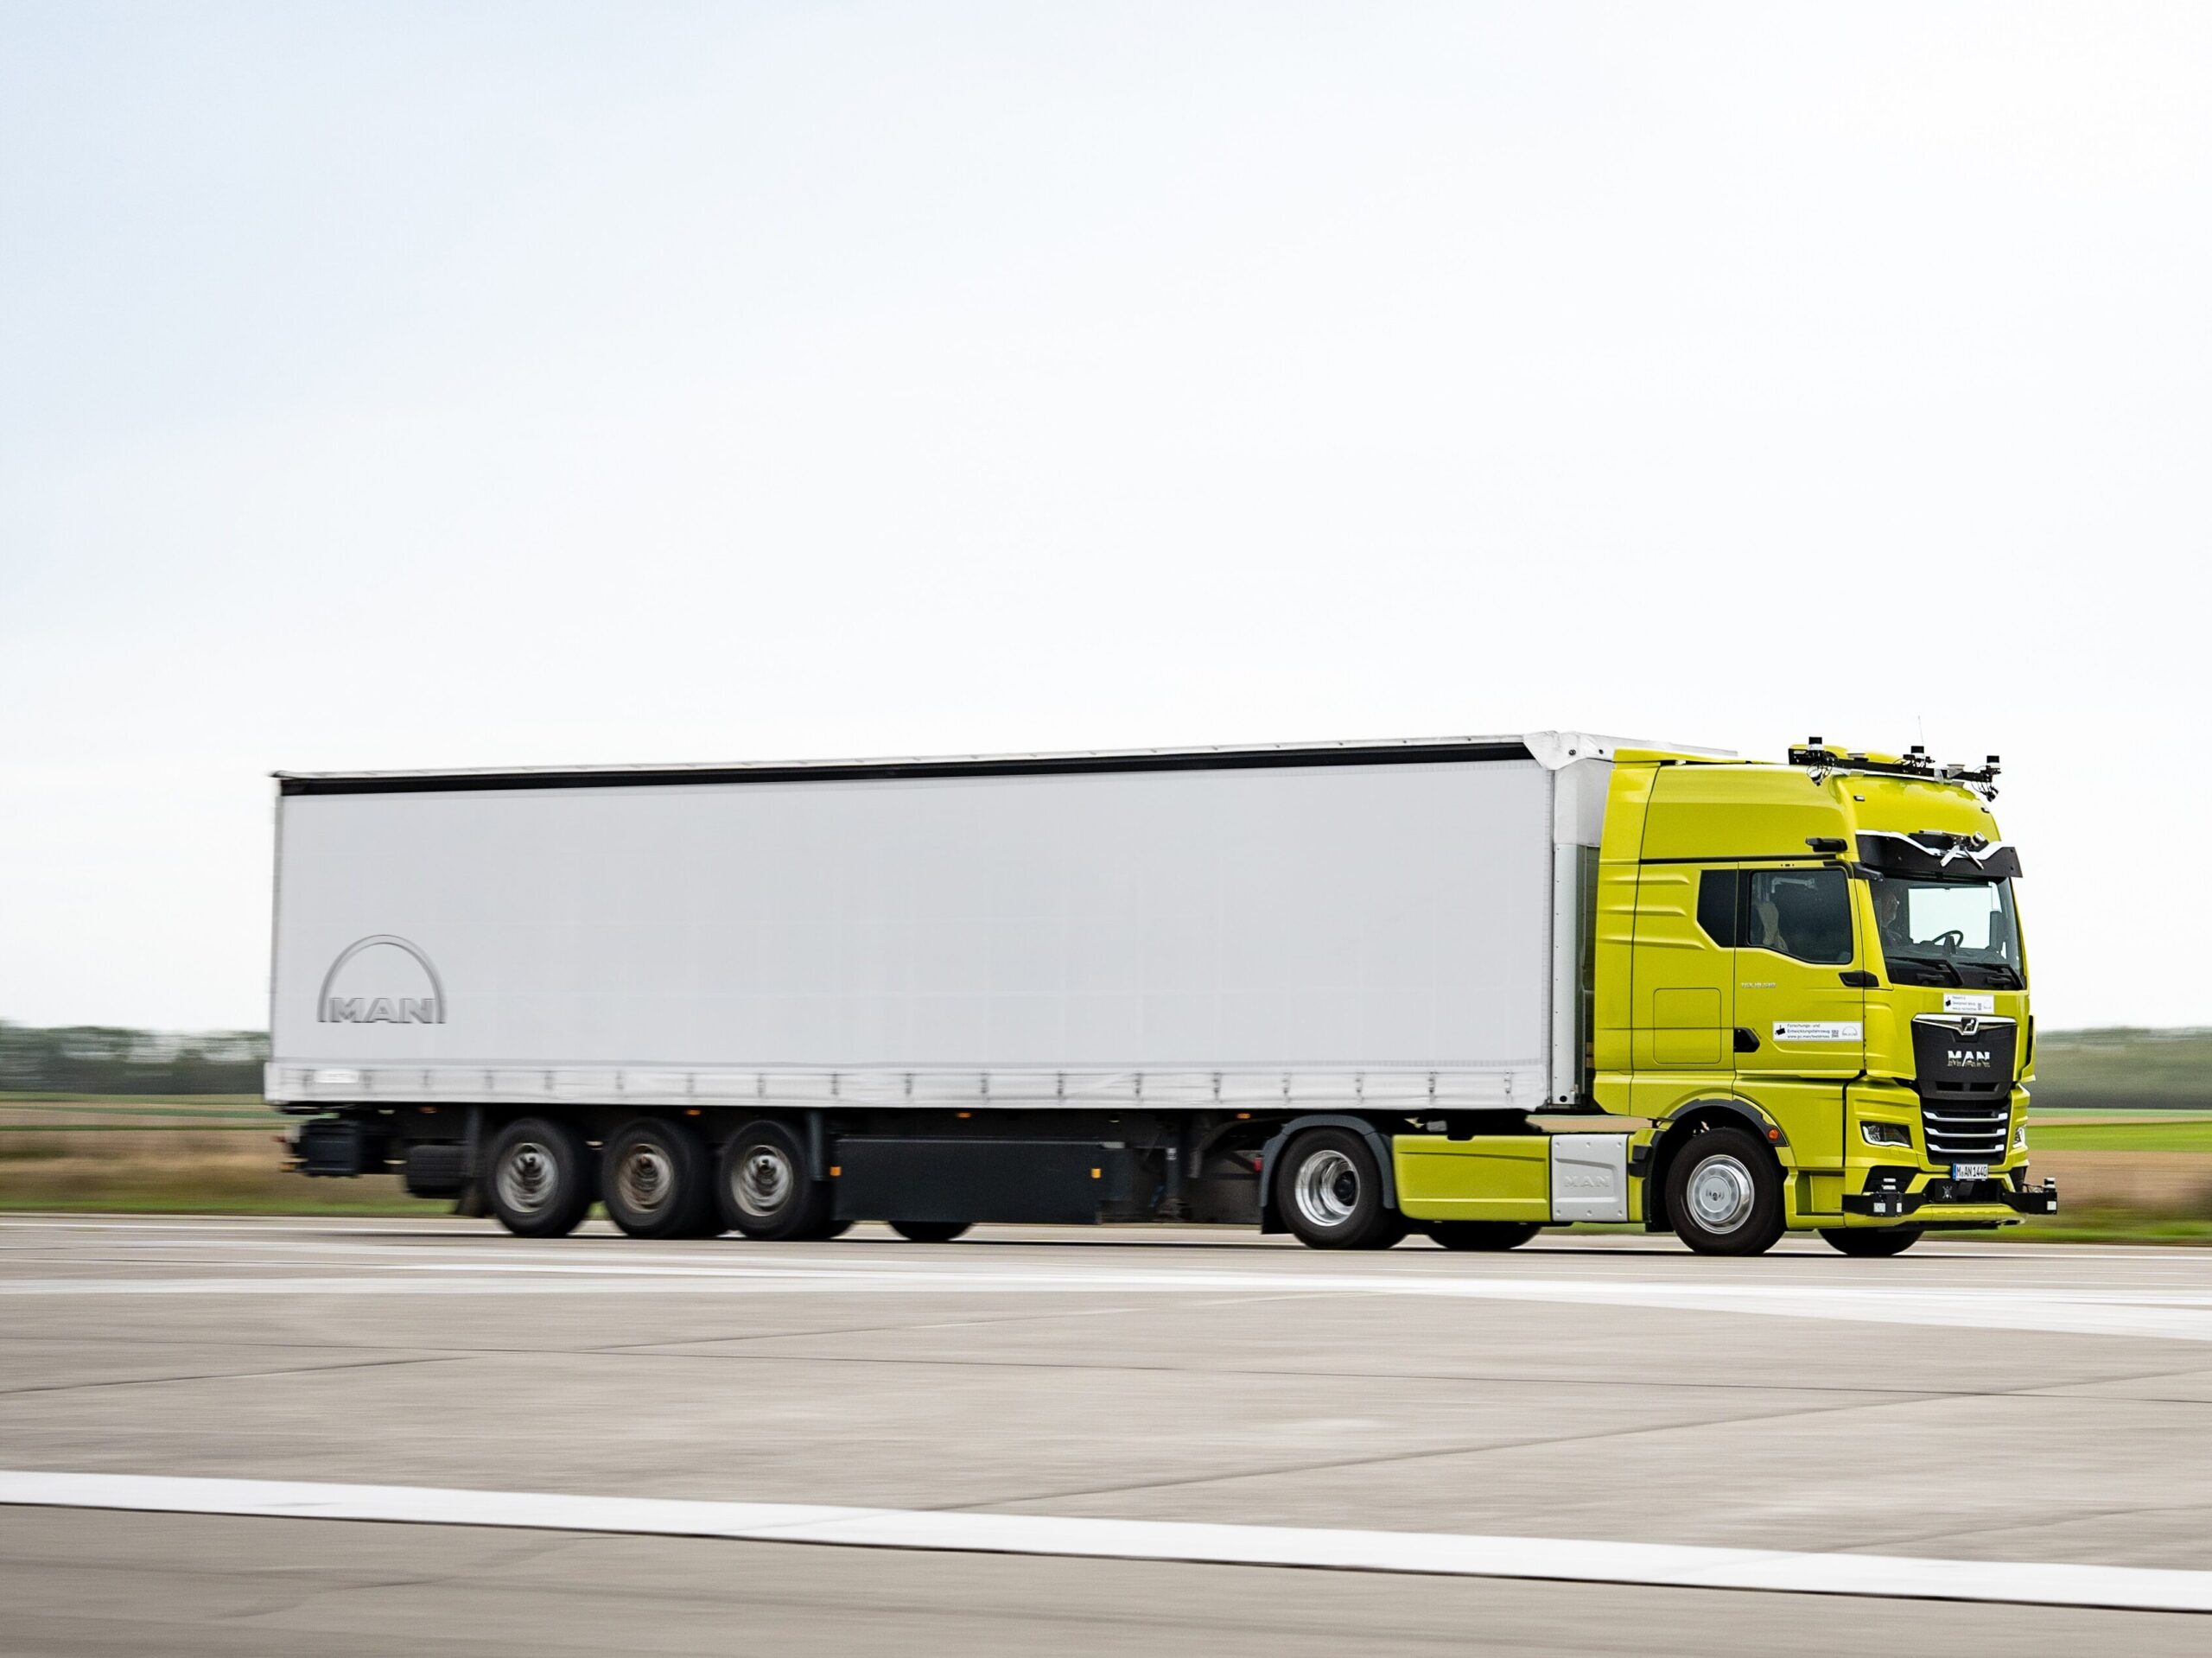 MAN and Plus to Drive Deployment of Autonomous Trucks